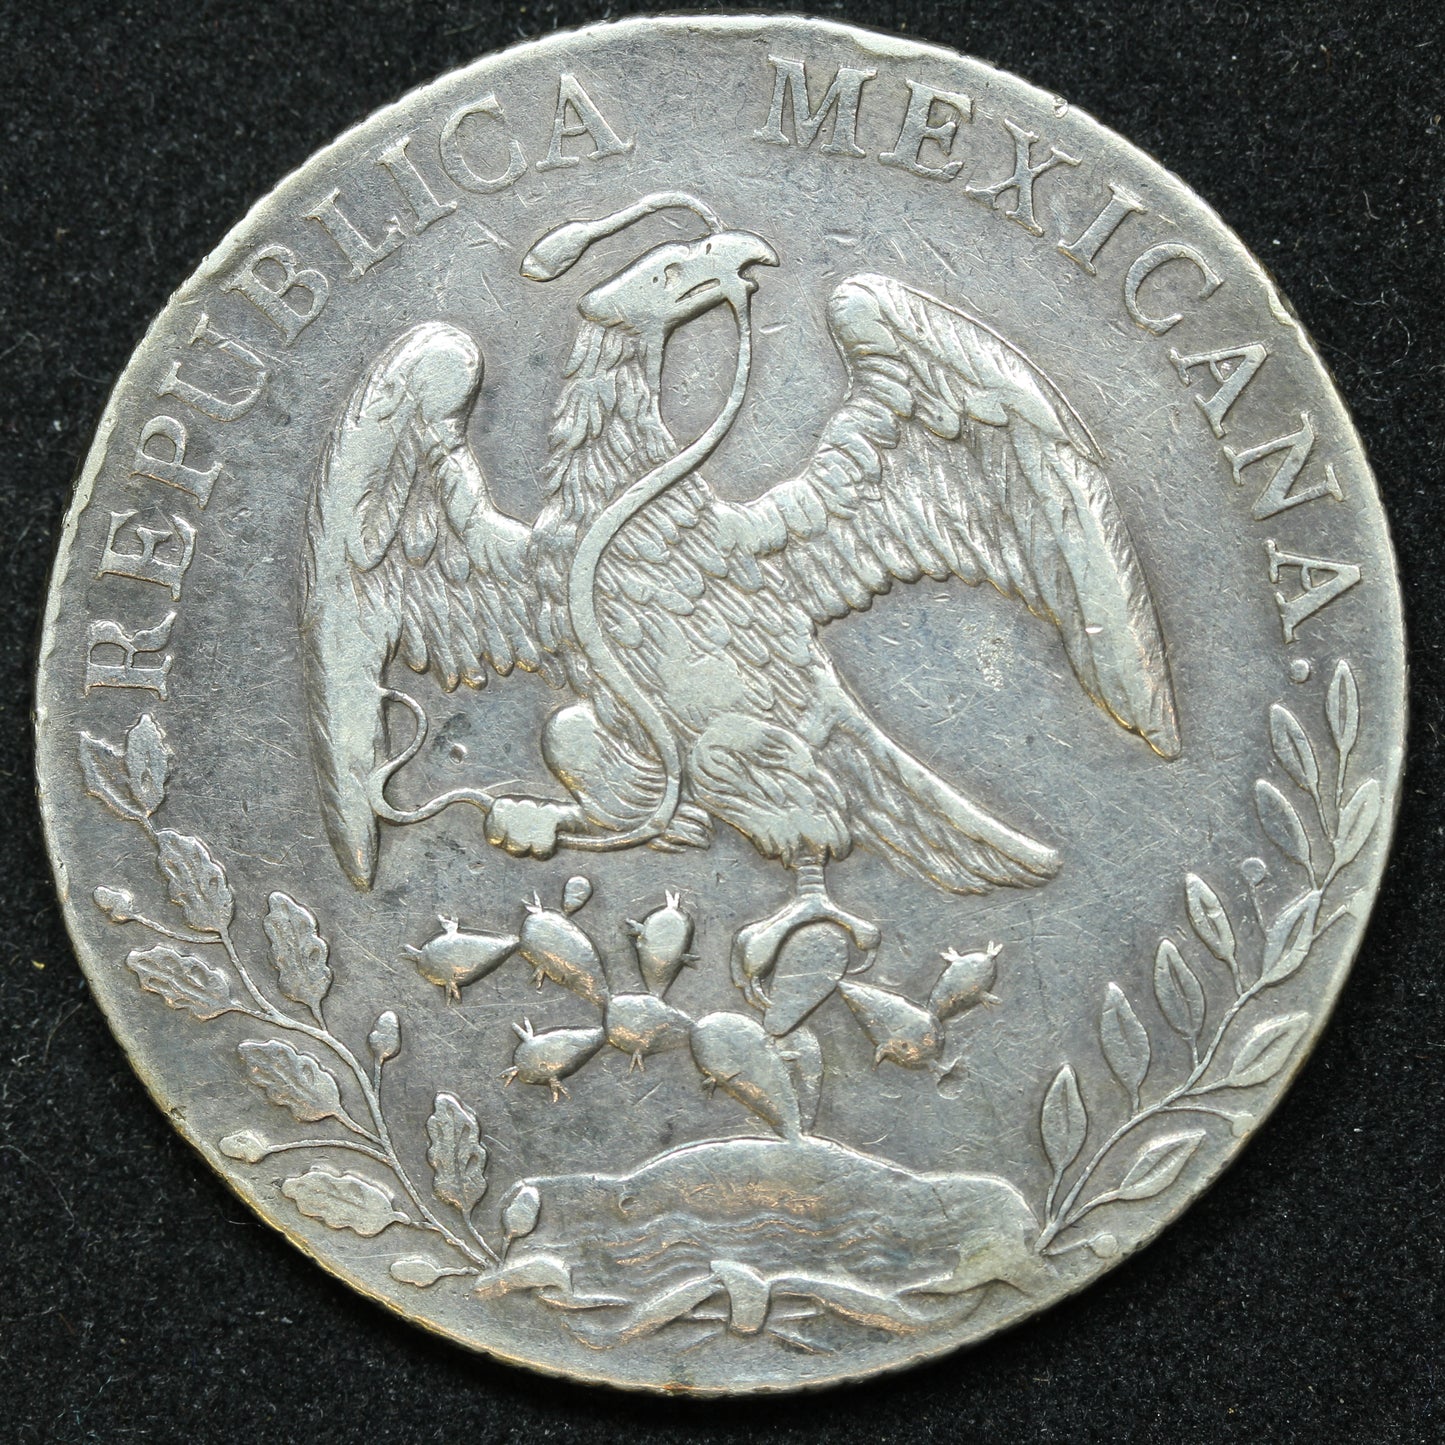 1888 Mo MH Mexico 8 Reales Silver Coin - KM# 377.10